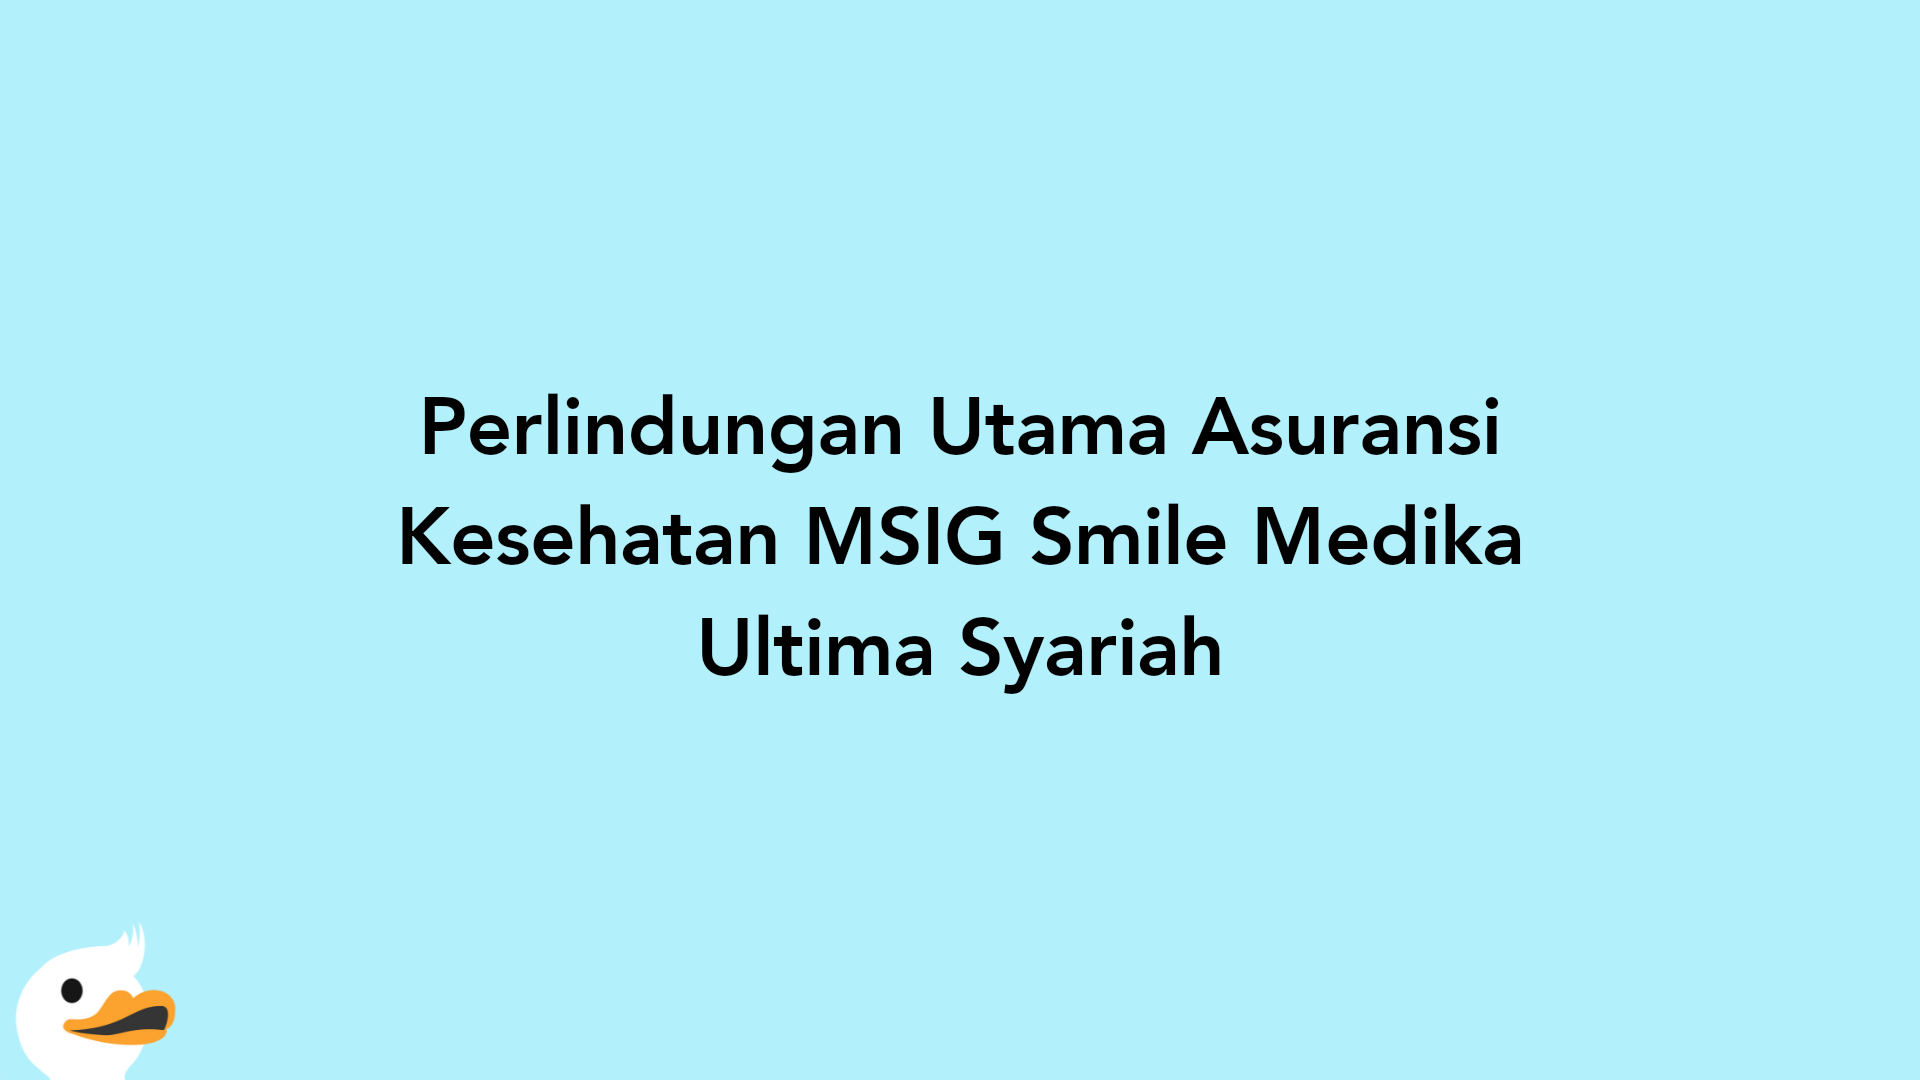 Perlindungan Utama Asuransi Kesehatan MSIG Smile Medika Ultima Syariah